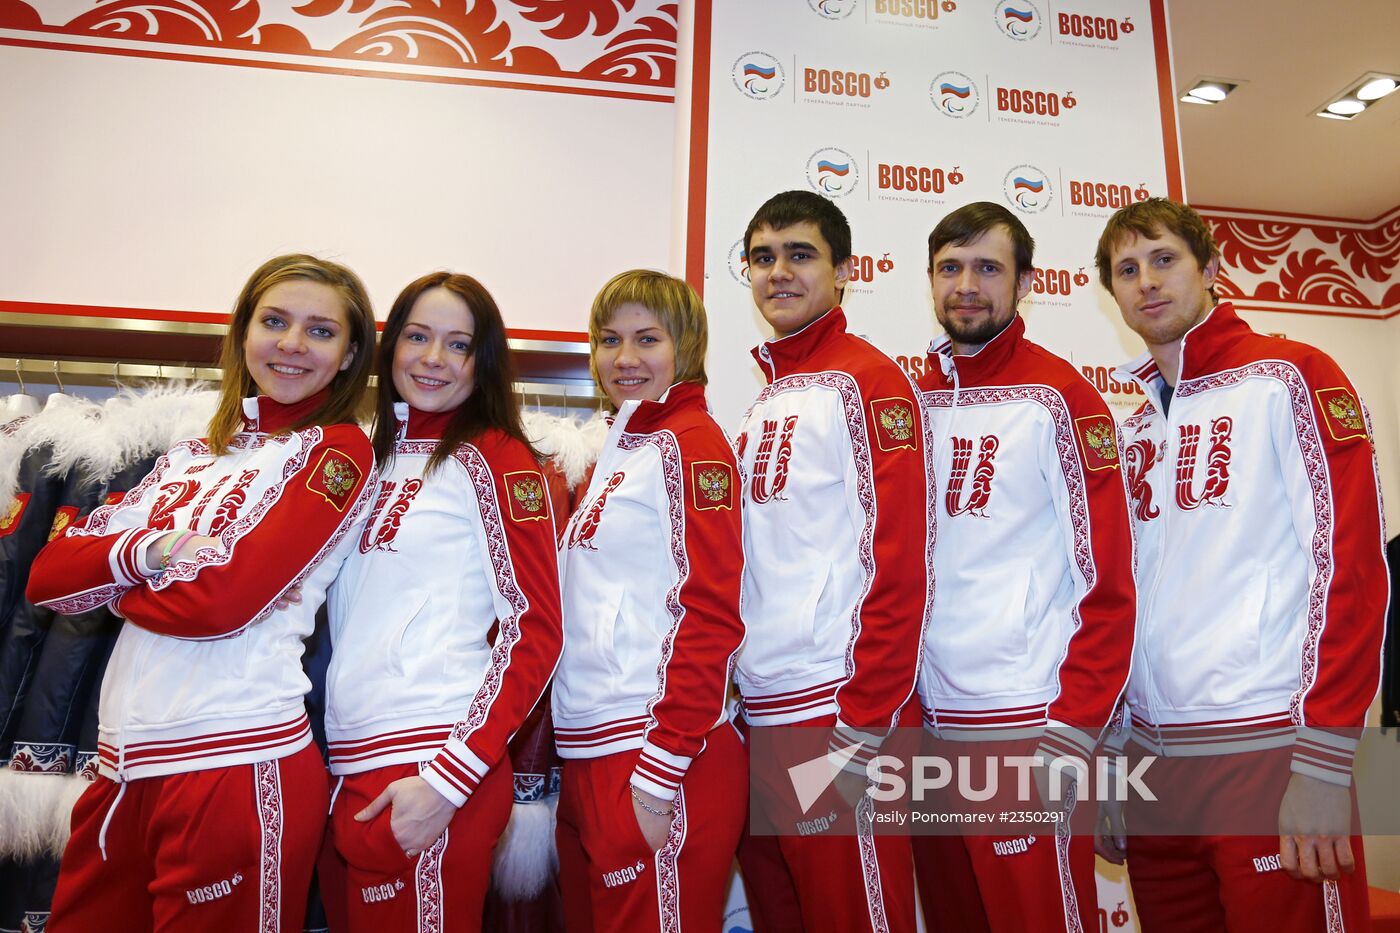 Russian Olympic skeleton team's gear